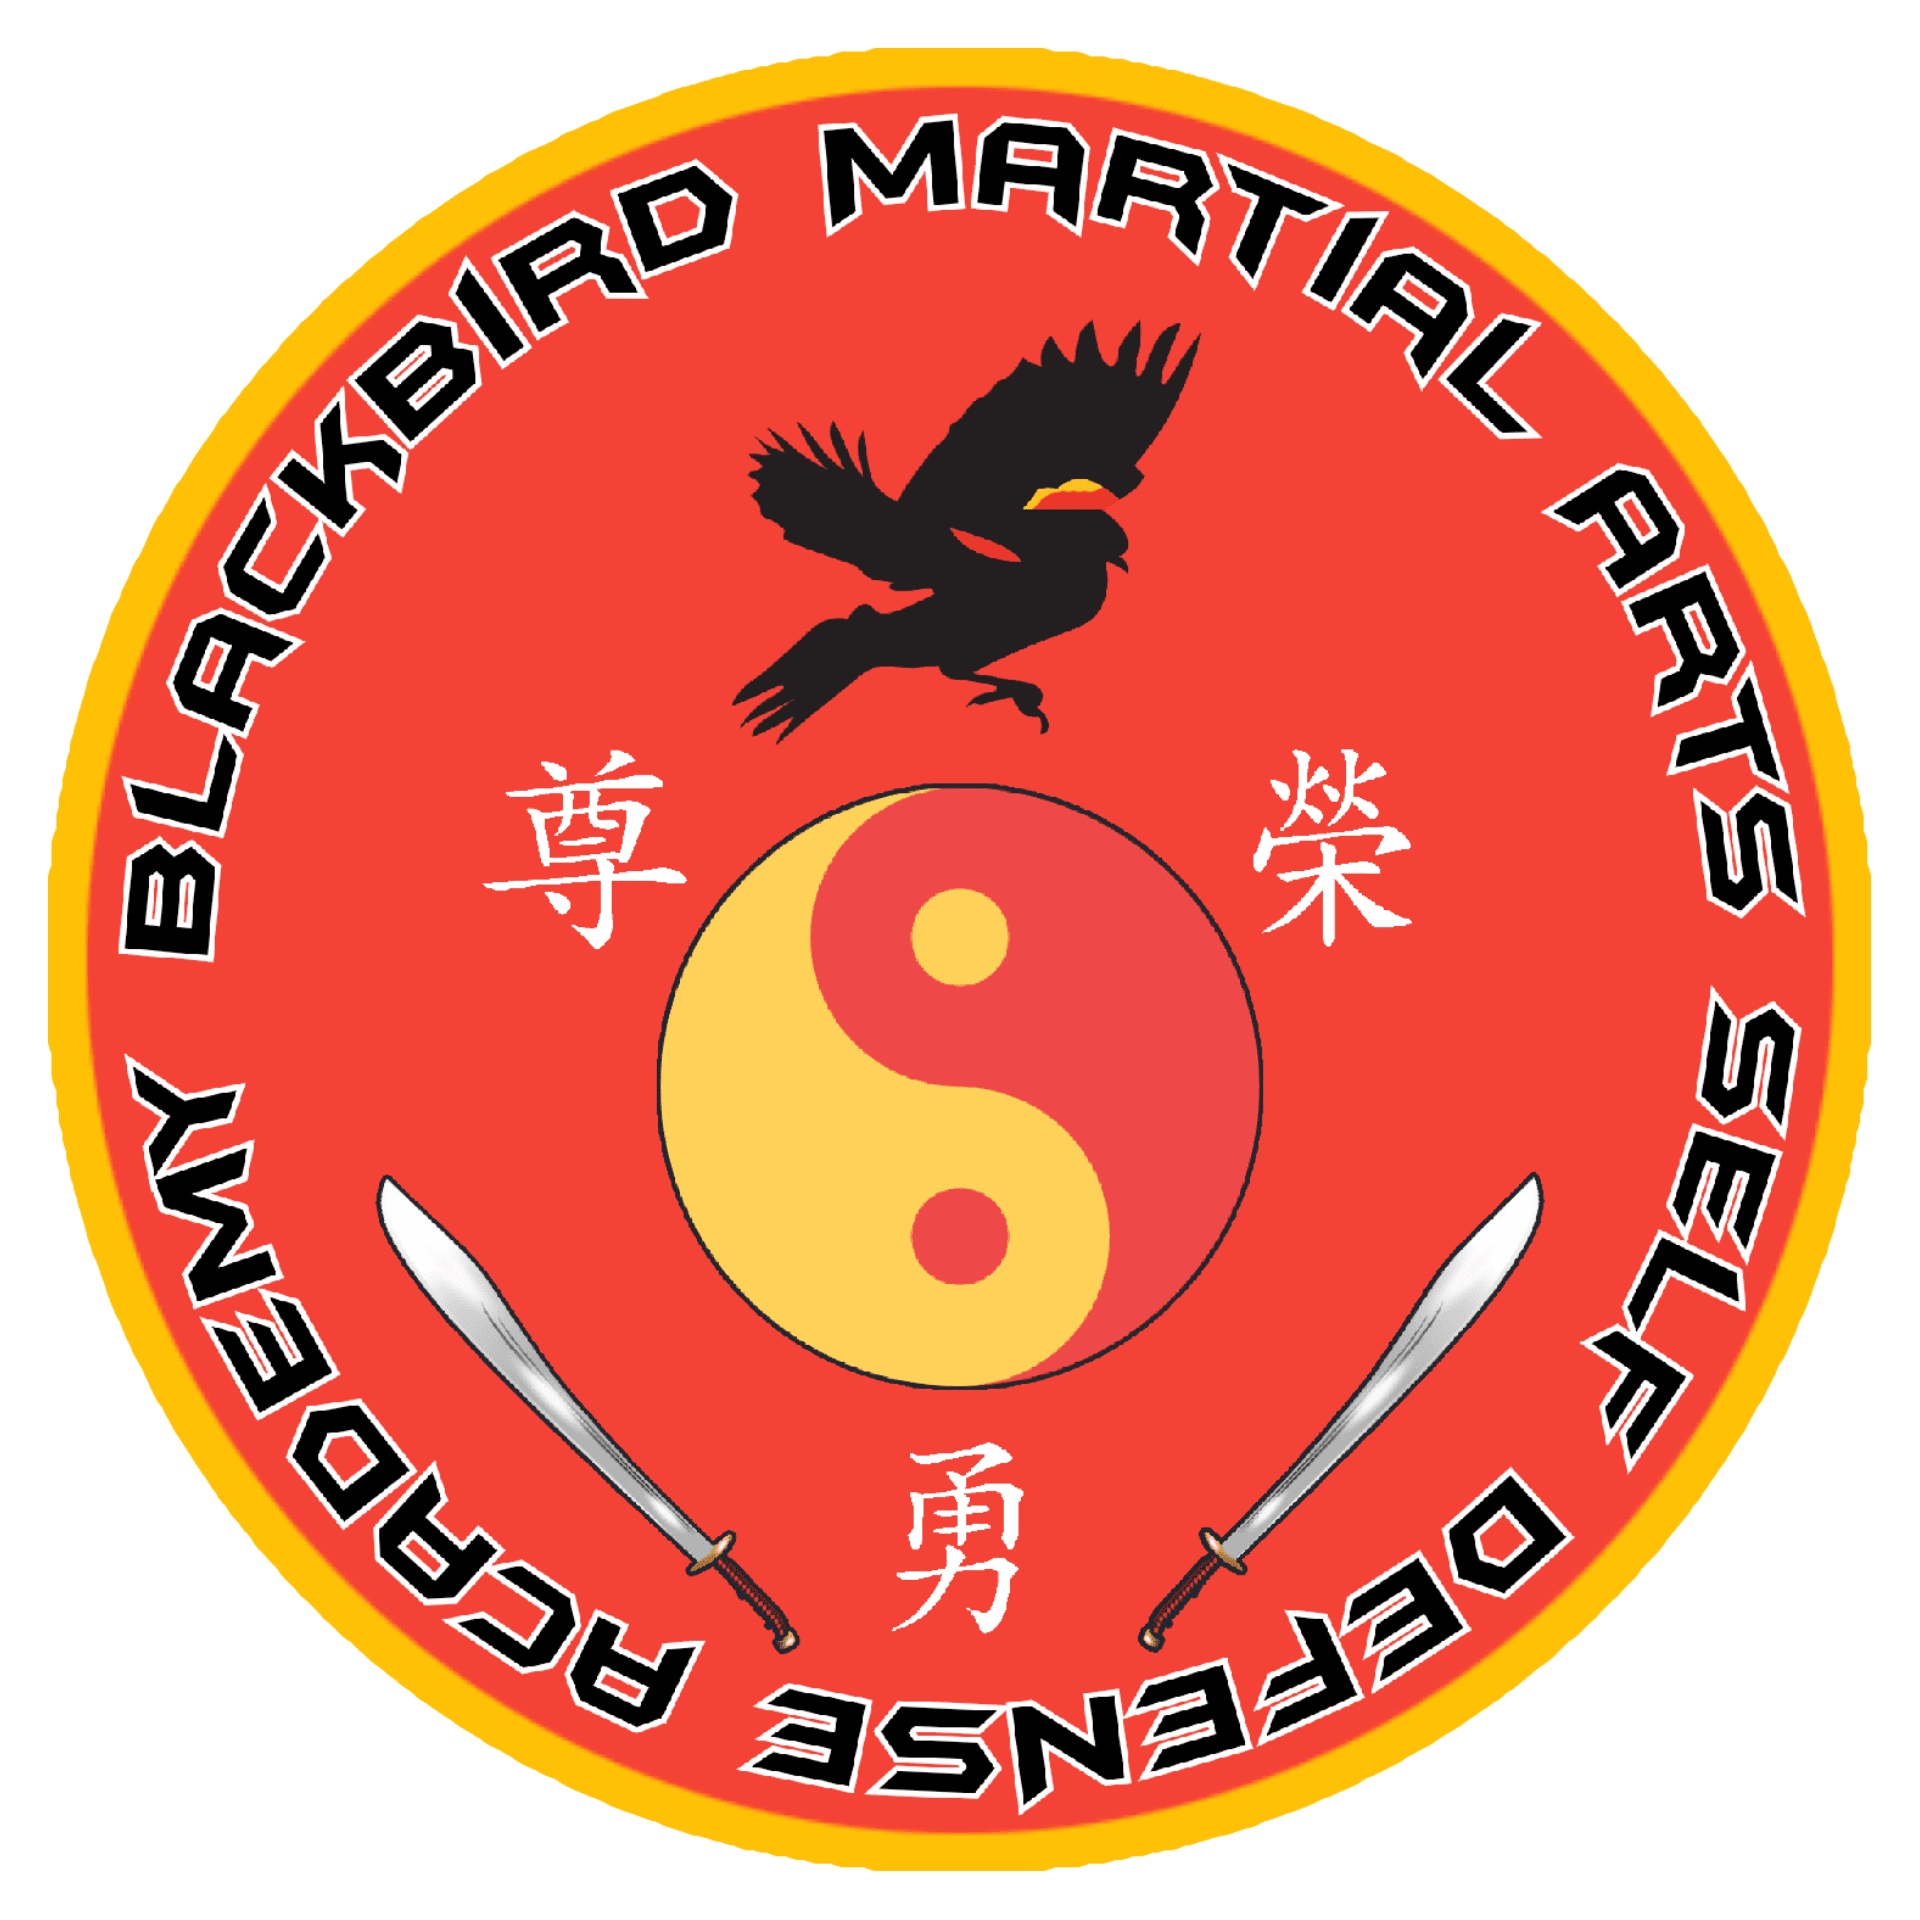 BlackBird Martial Arts and Self Defense Academy